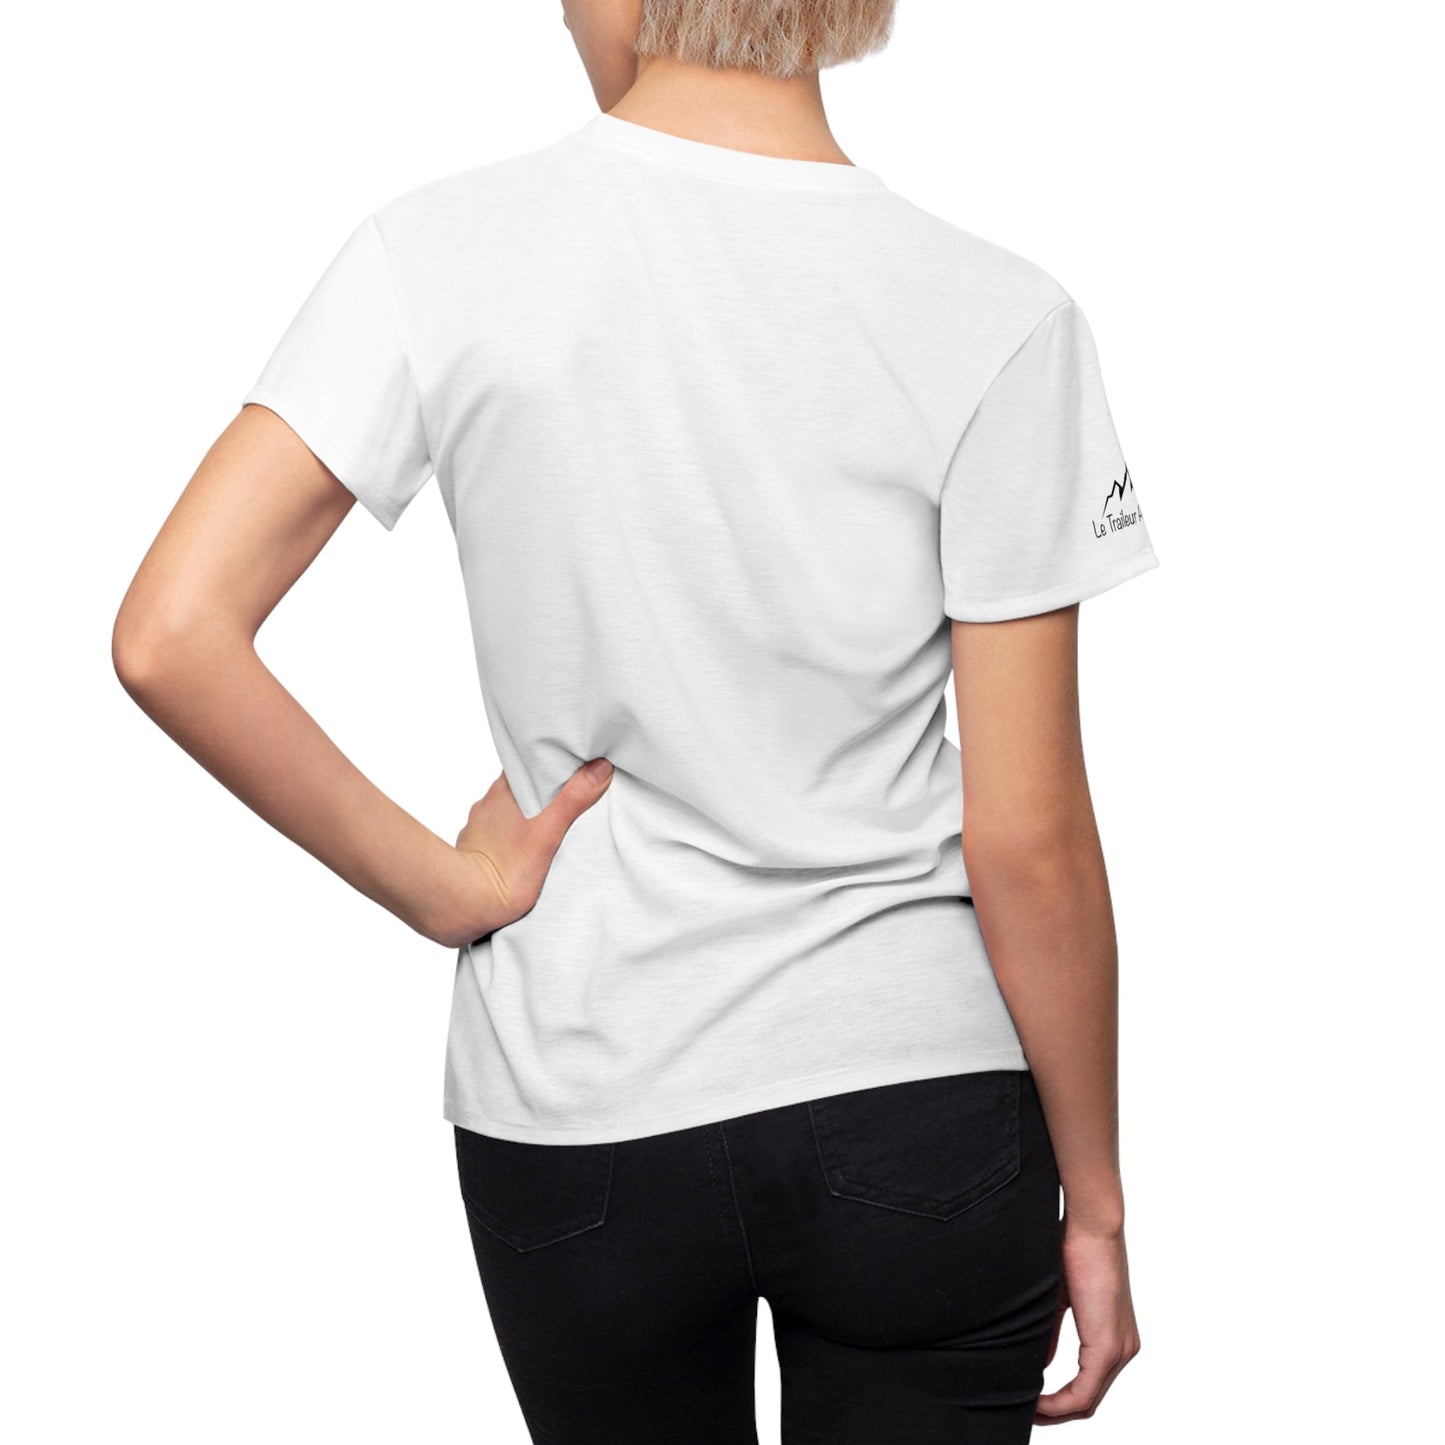 T-Shirt Sport Blanc - Femme - Collection "Fra©tiguée" (130) - Le Traileur Anonyme